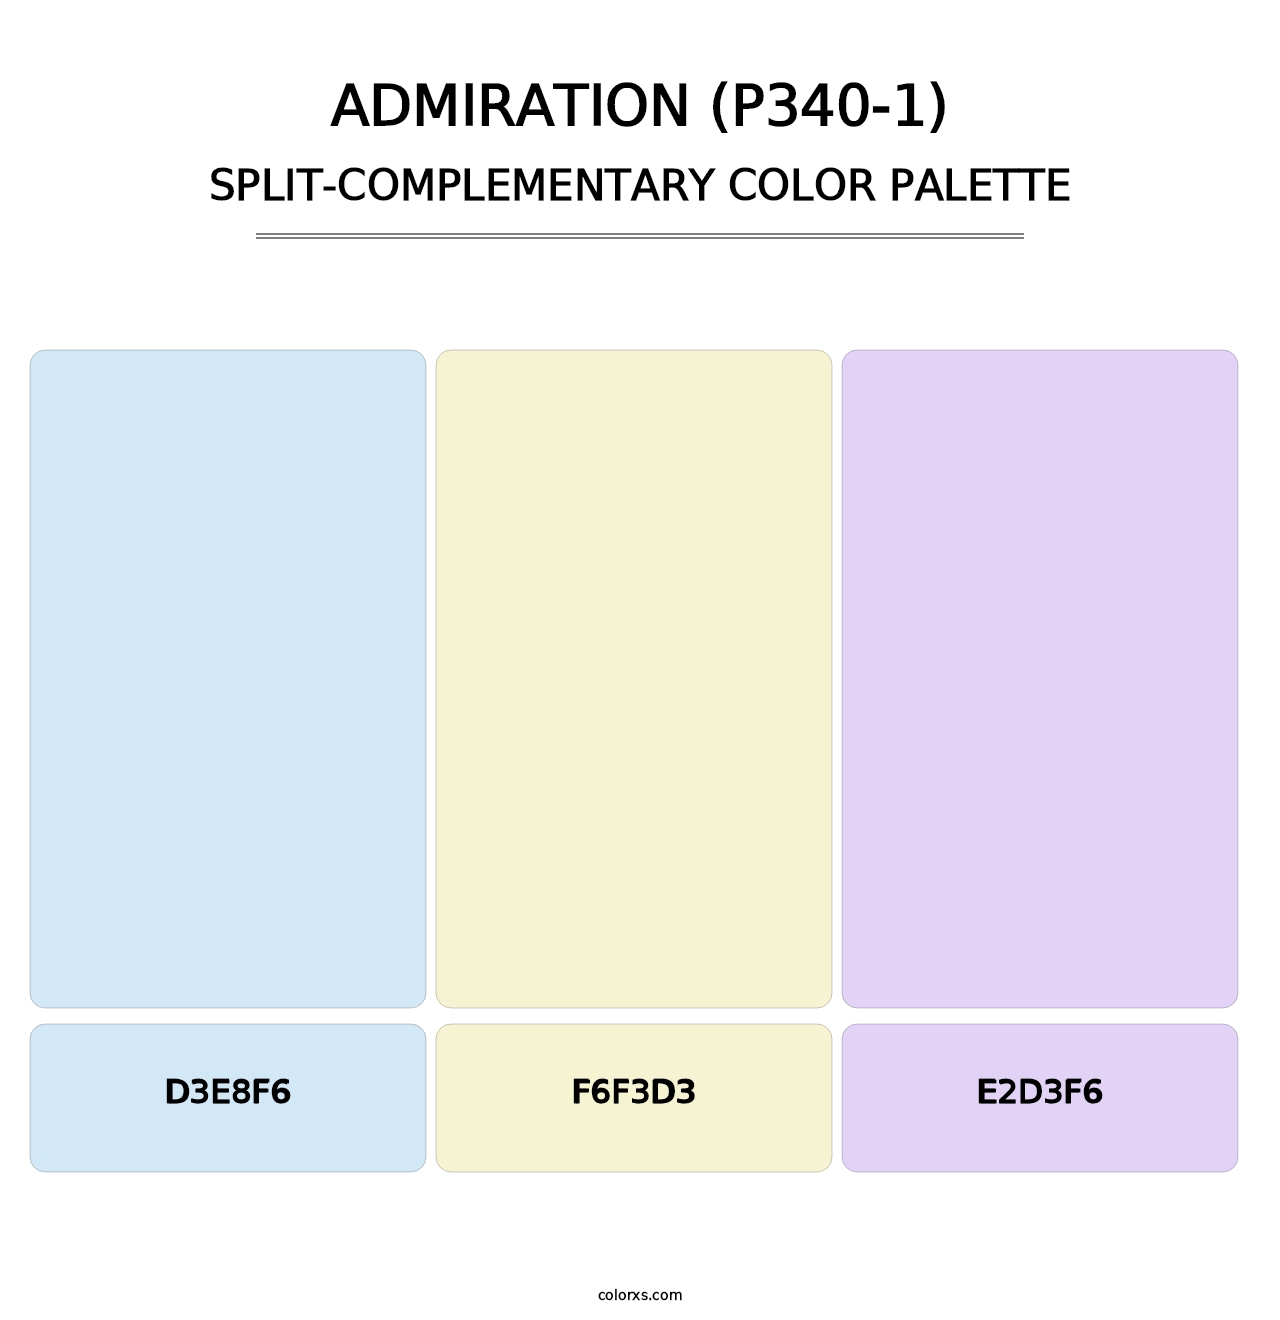 Admiration (P340-1) - Split-Complementary Color Palette